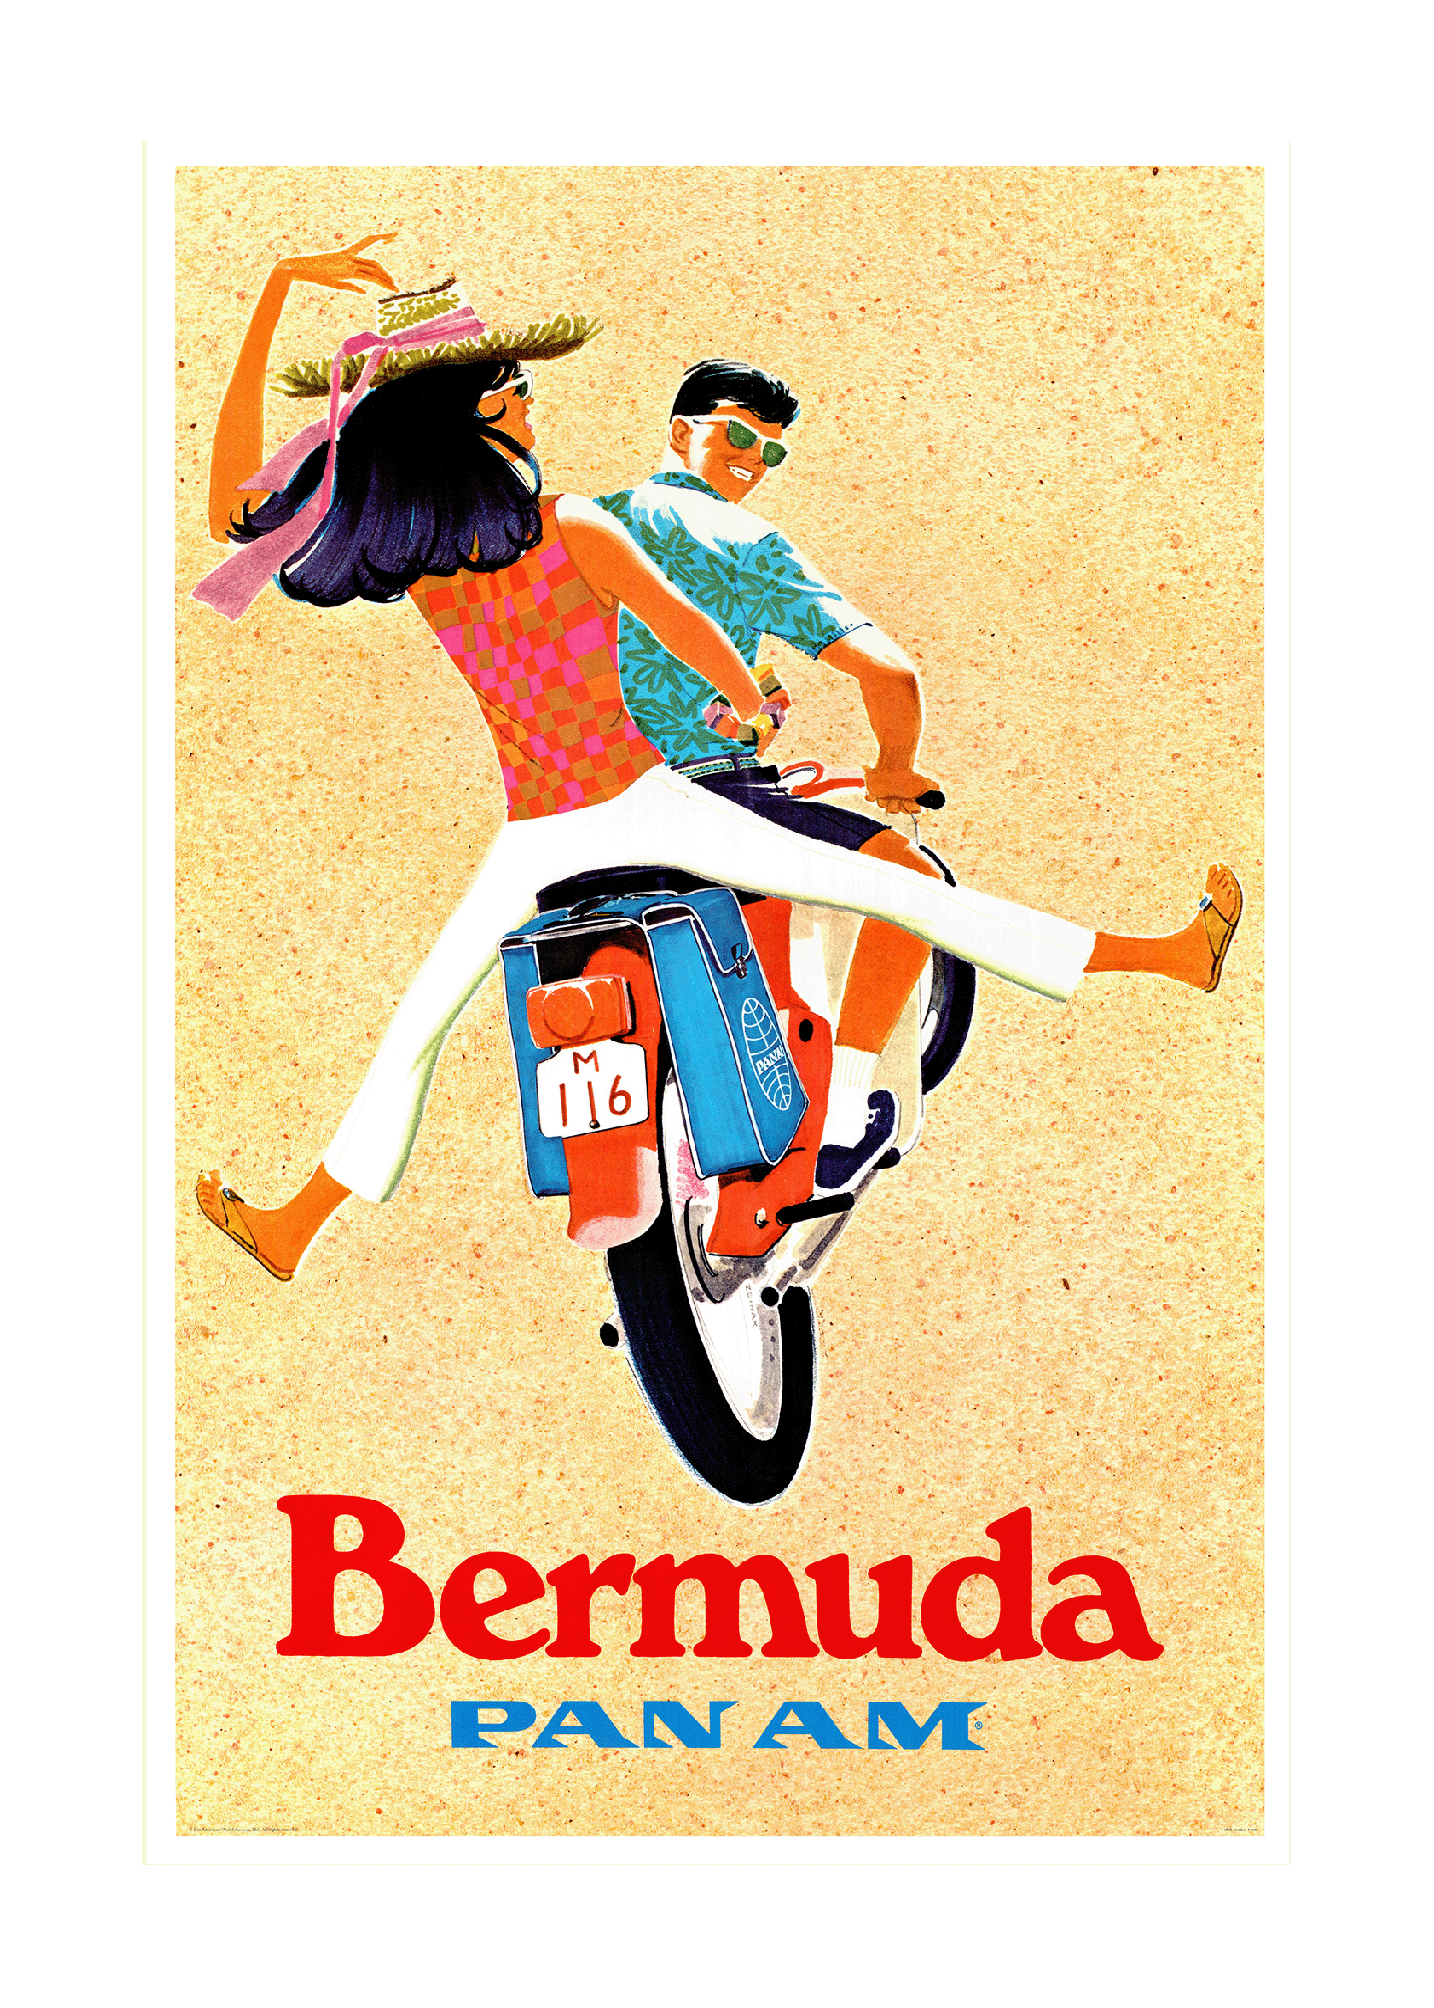 Bermuda, Pan Am, 1960s [Scooter riders].